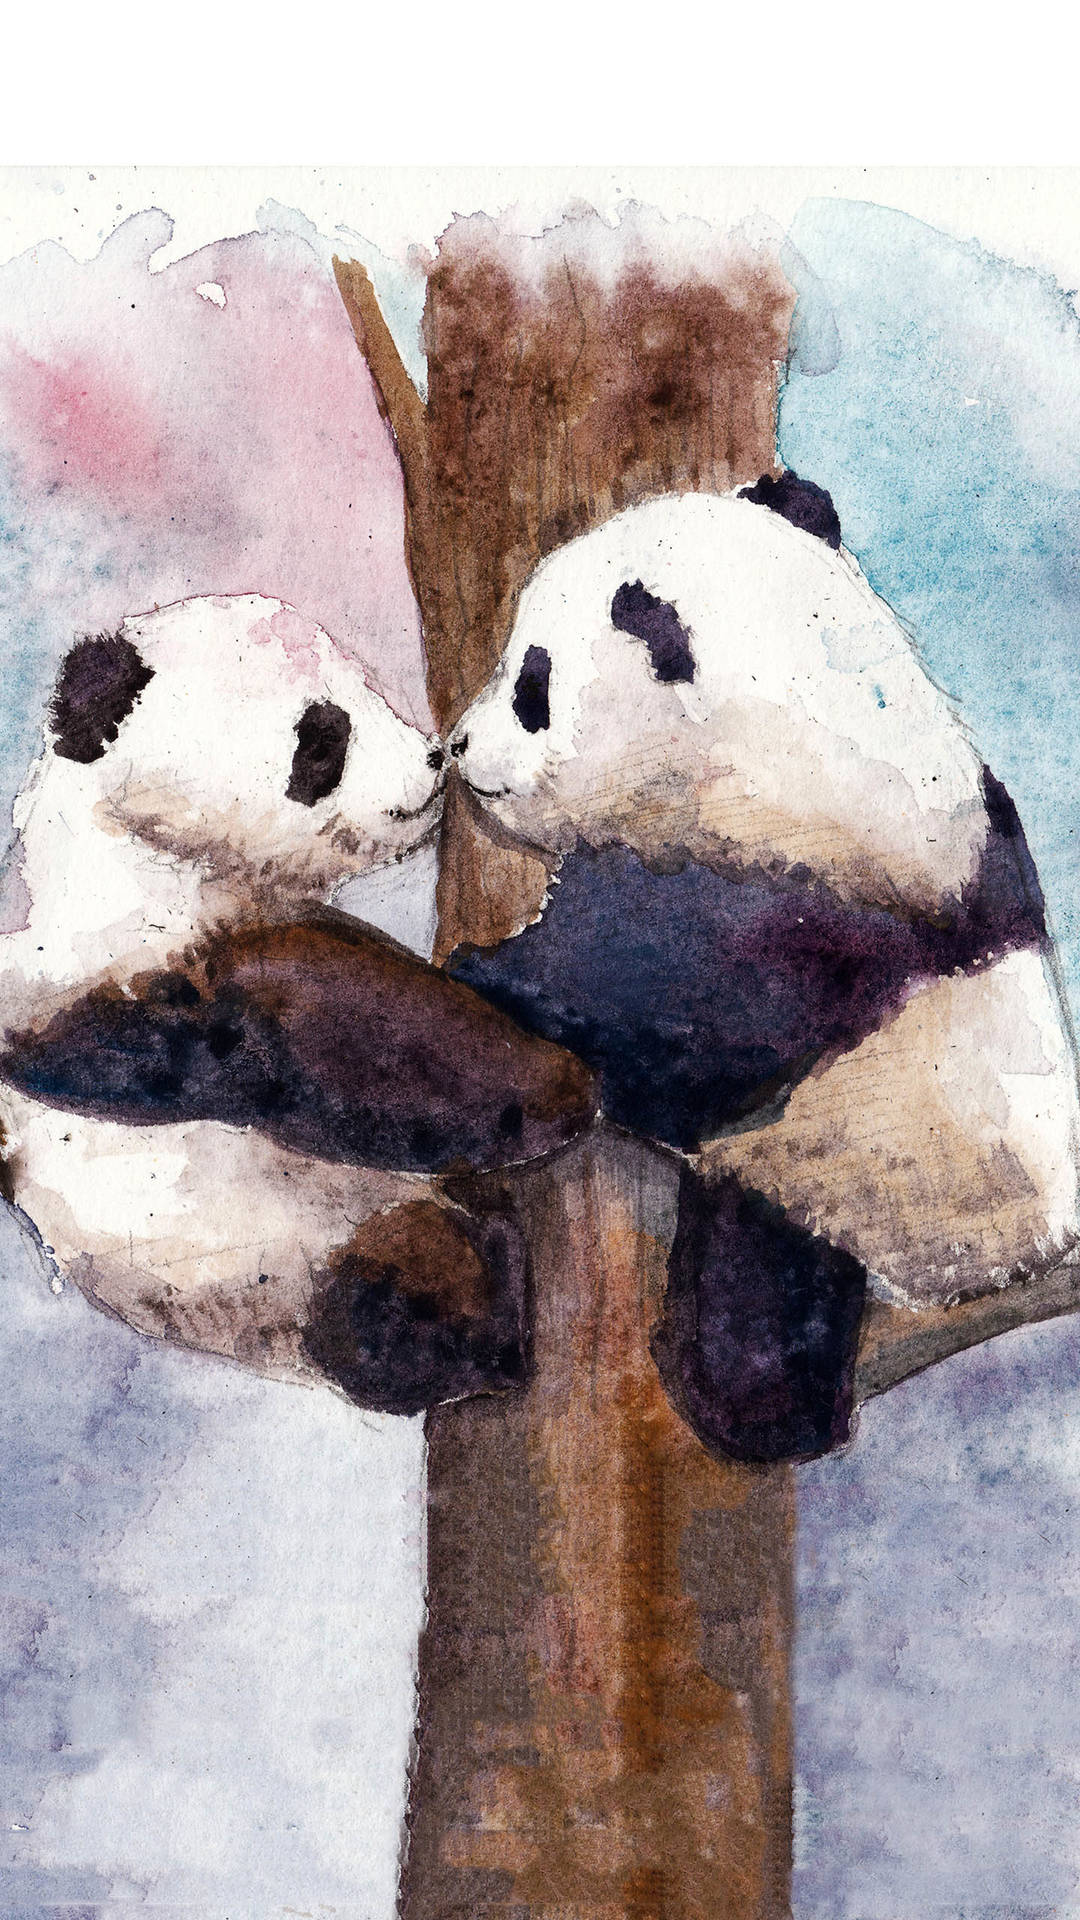 200_2005871_two_giant_pandas_in_climbing_trees_panda_wallpaper.jpg (1080×1920)